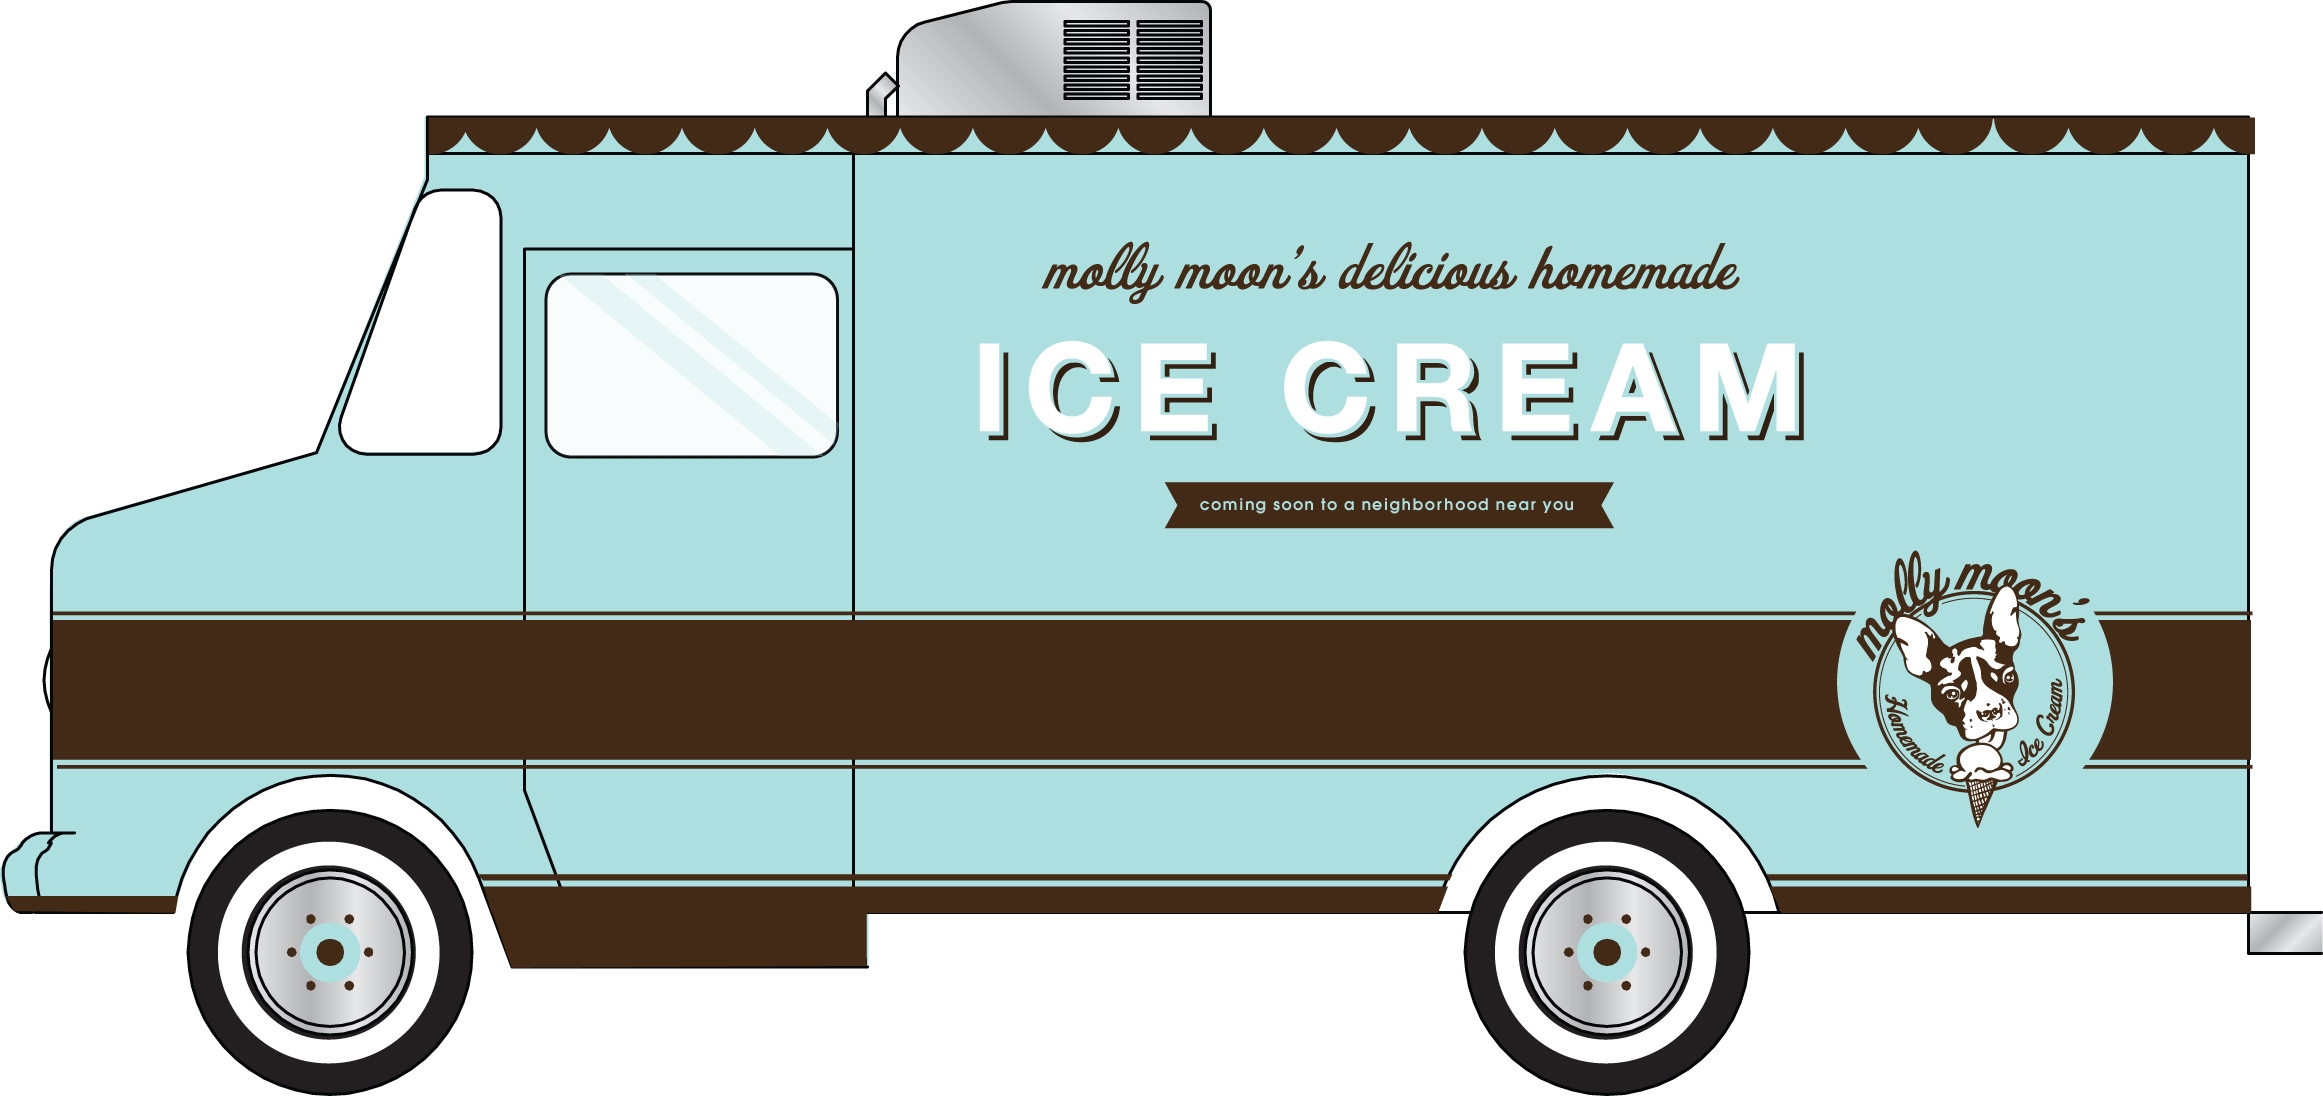 ... Ice Cream Truck Clip Art - ClipArt Best ...